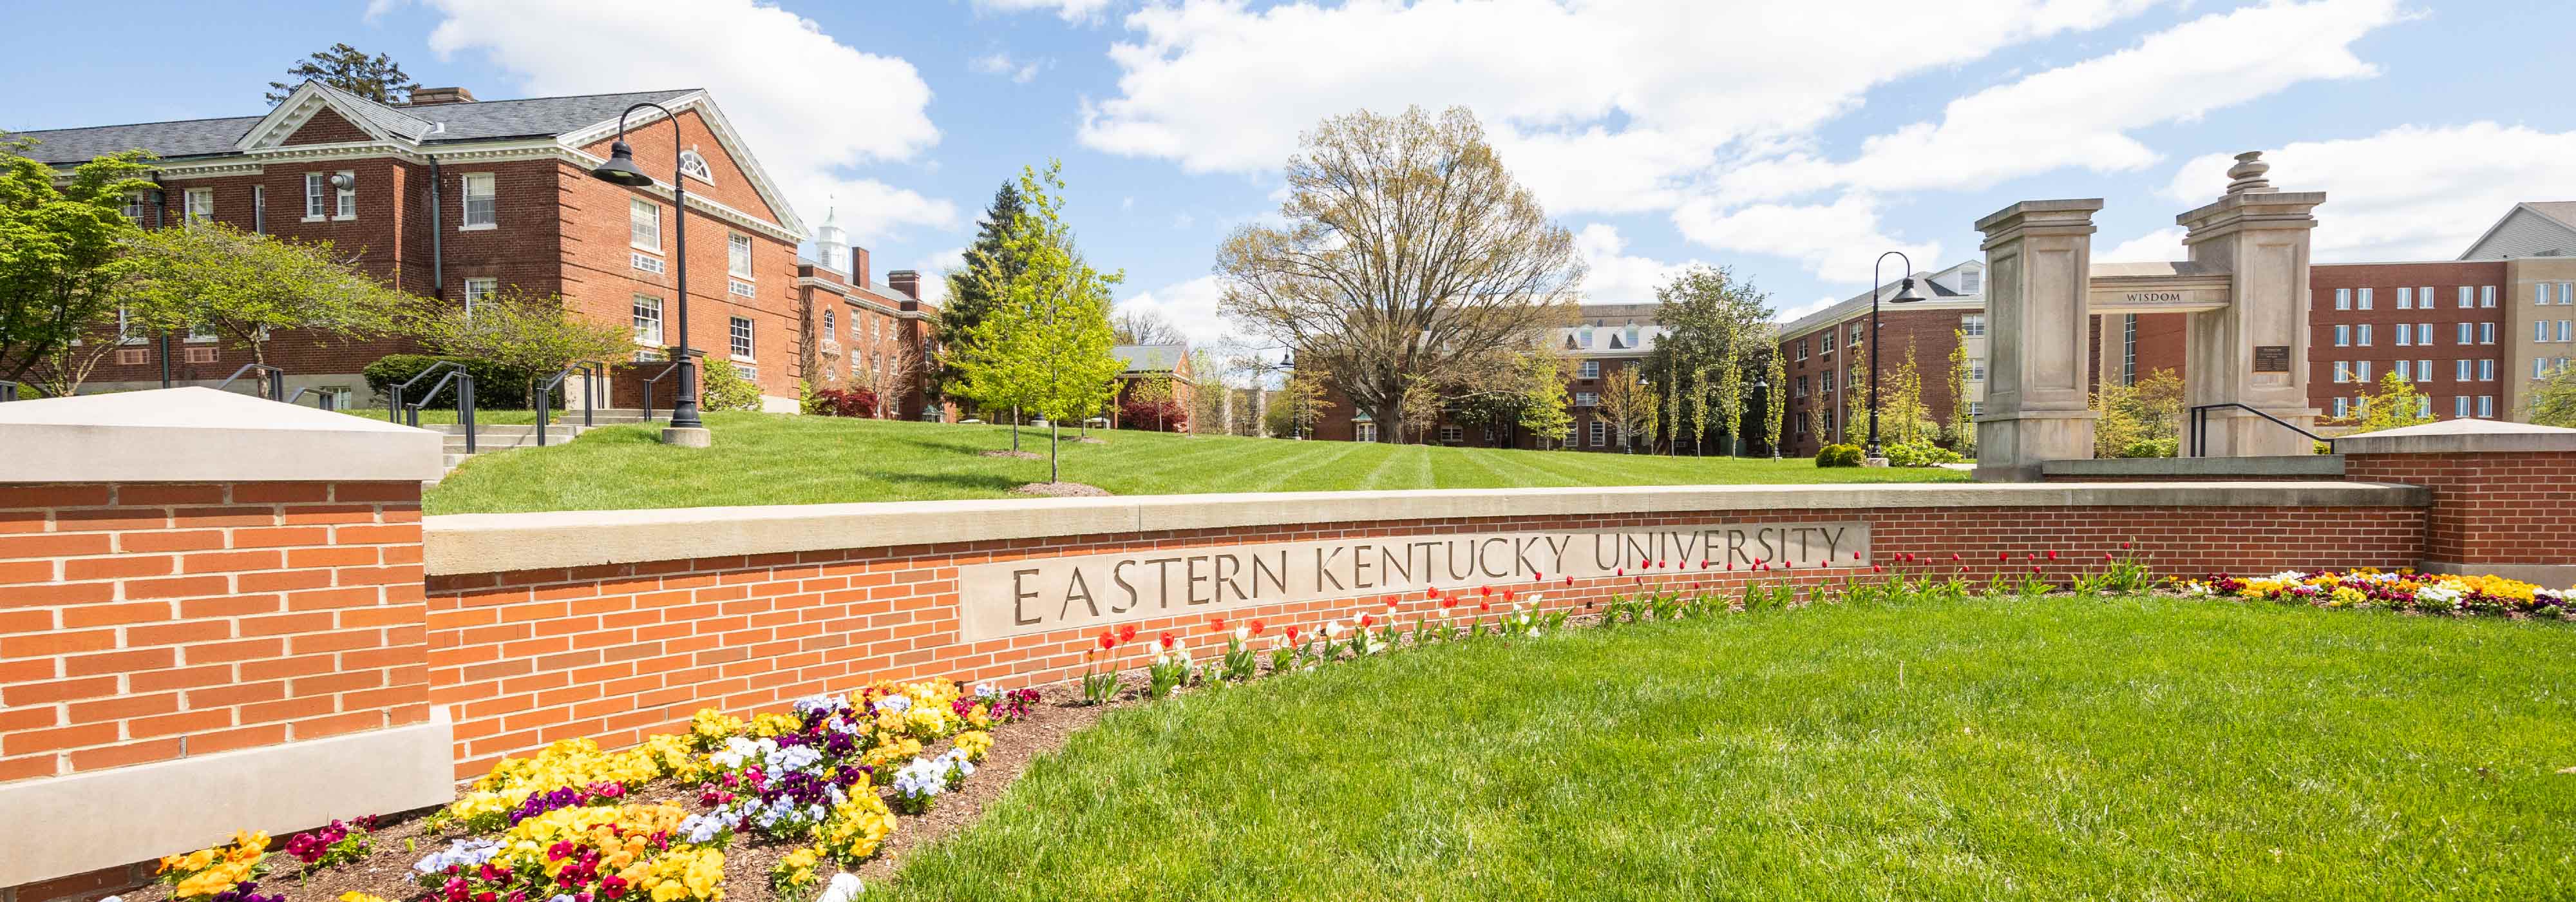 Eastern Kentucky University in USA